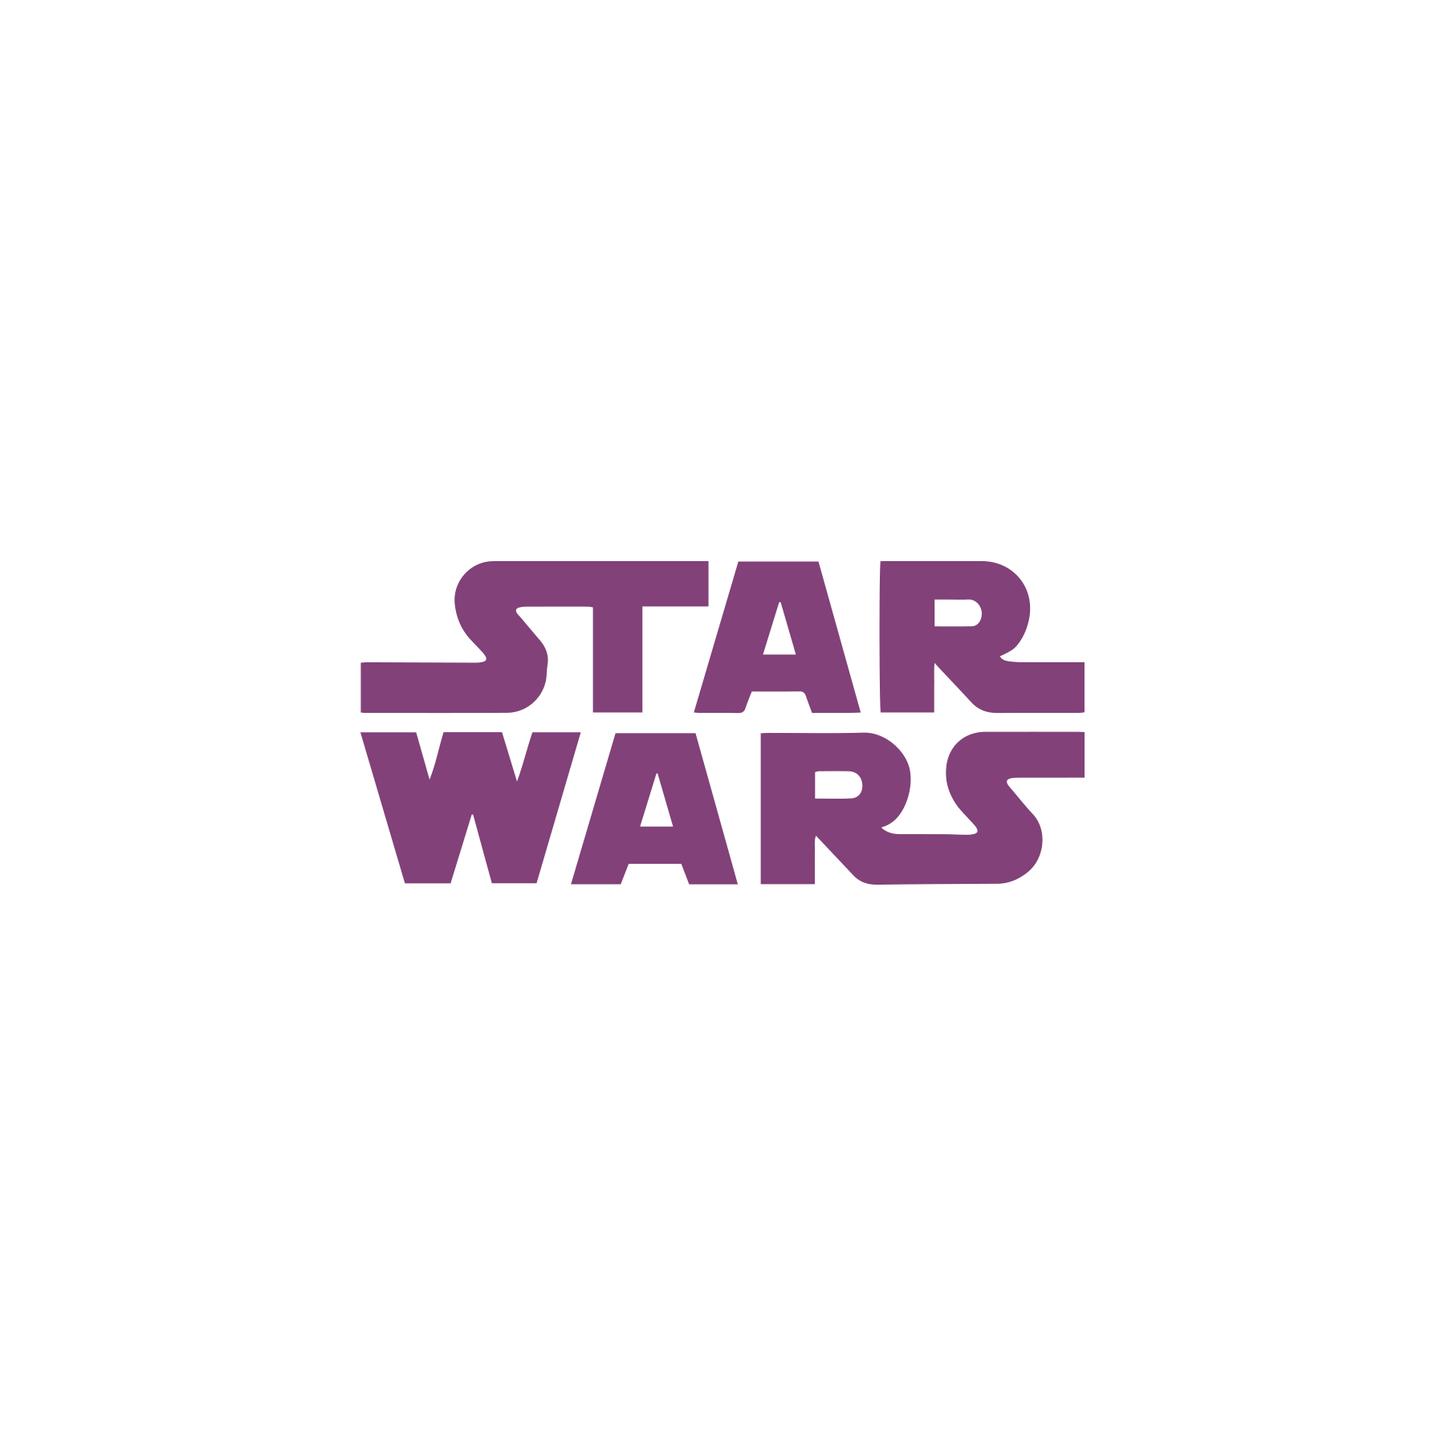 Star Wars Text Logo